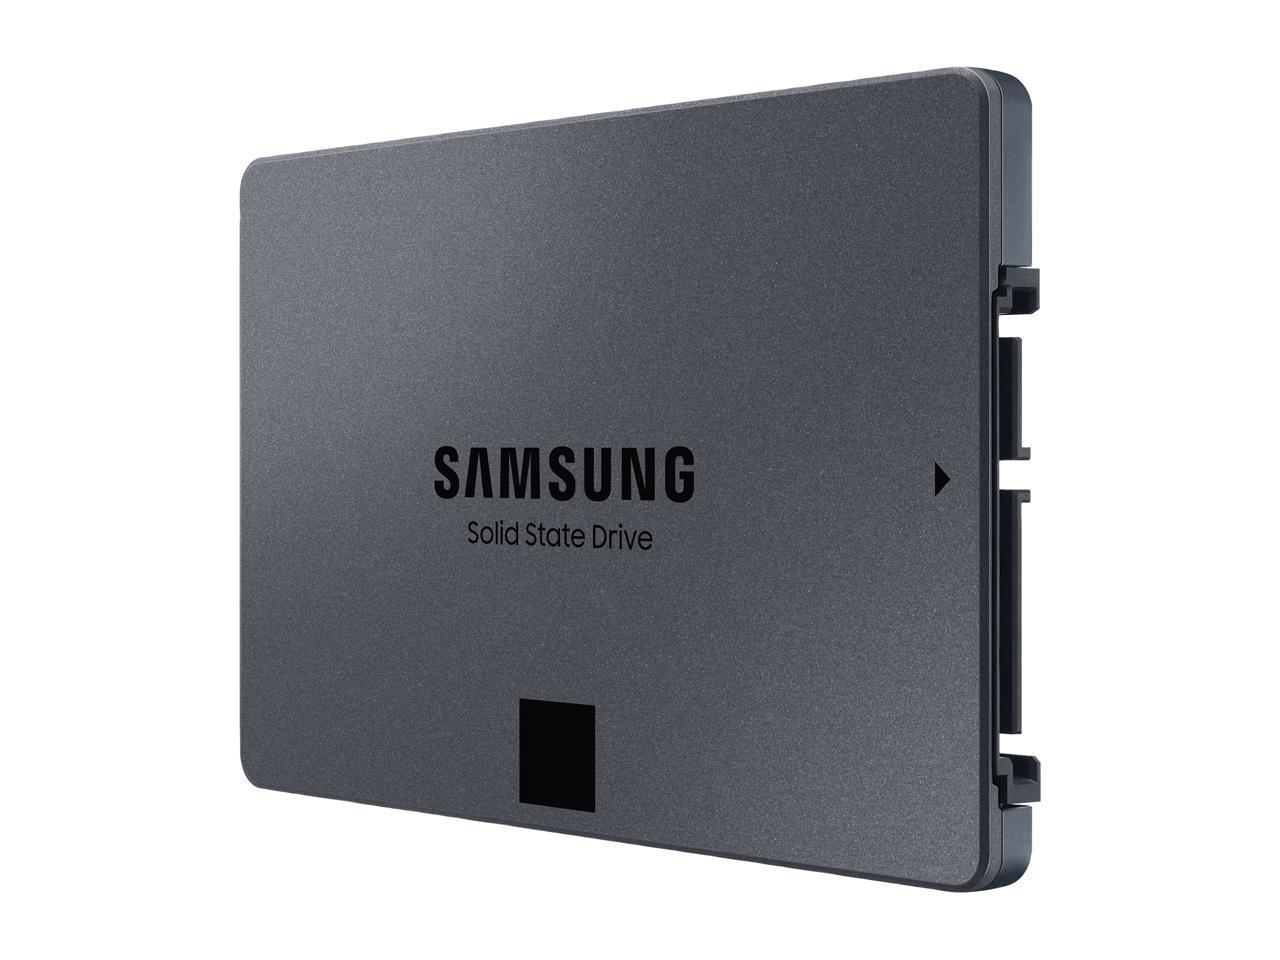 SAMSUNG 870 EVO SATA3 2TB SSD